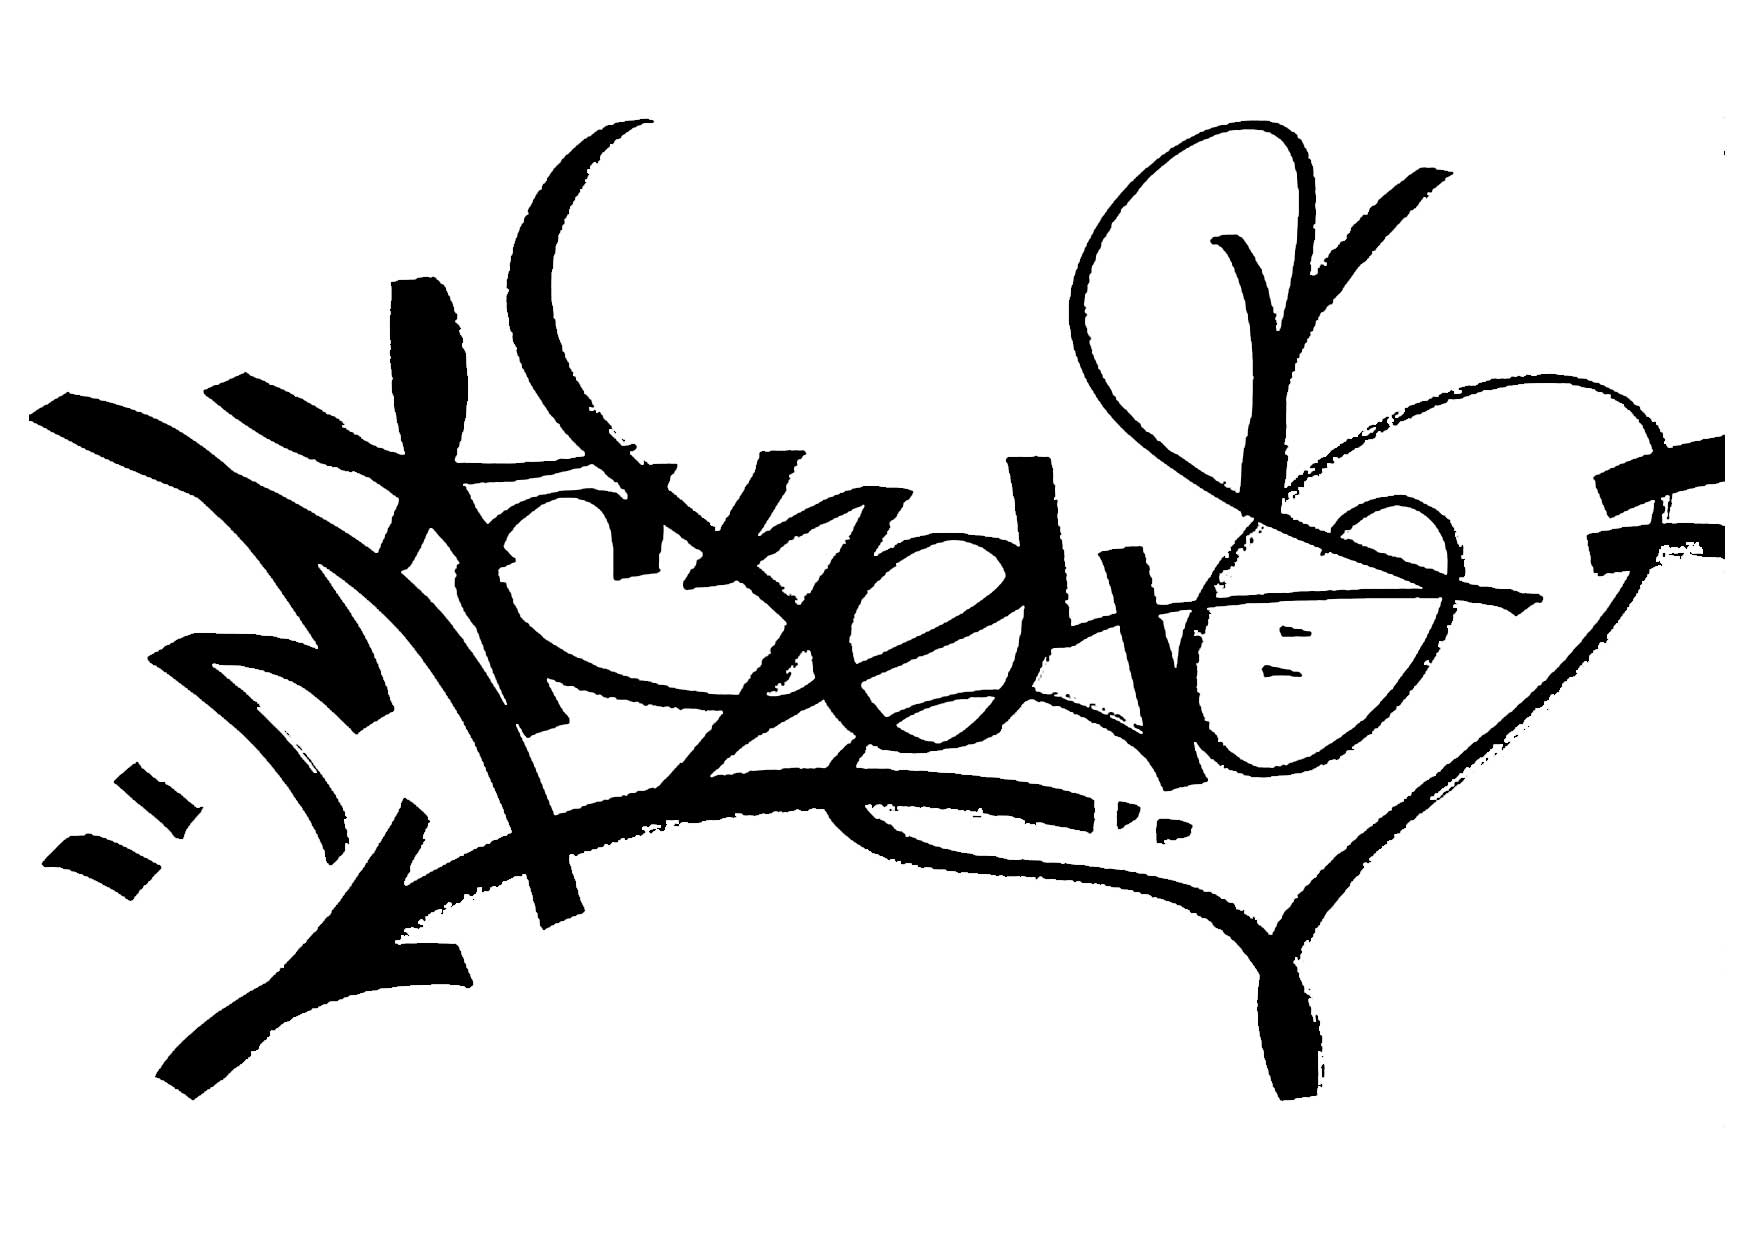 Graffiti Writer Mickey tag